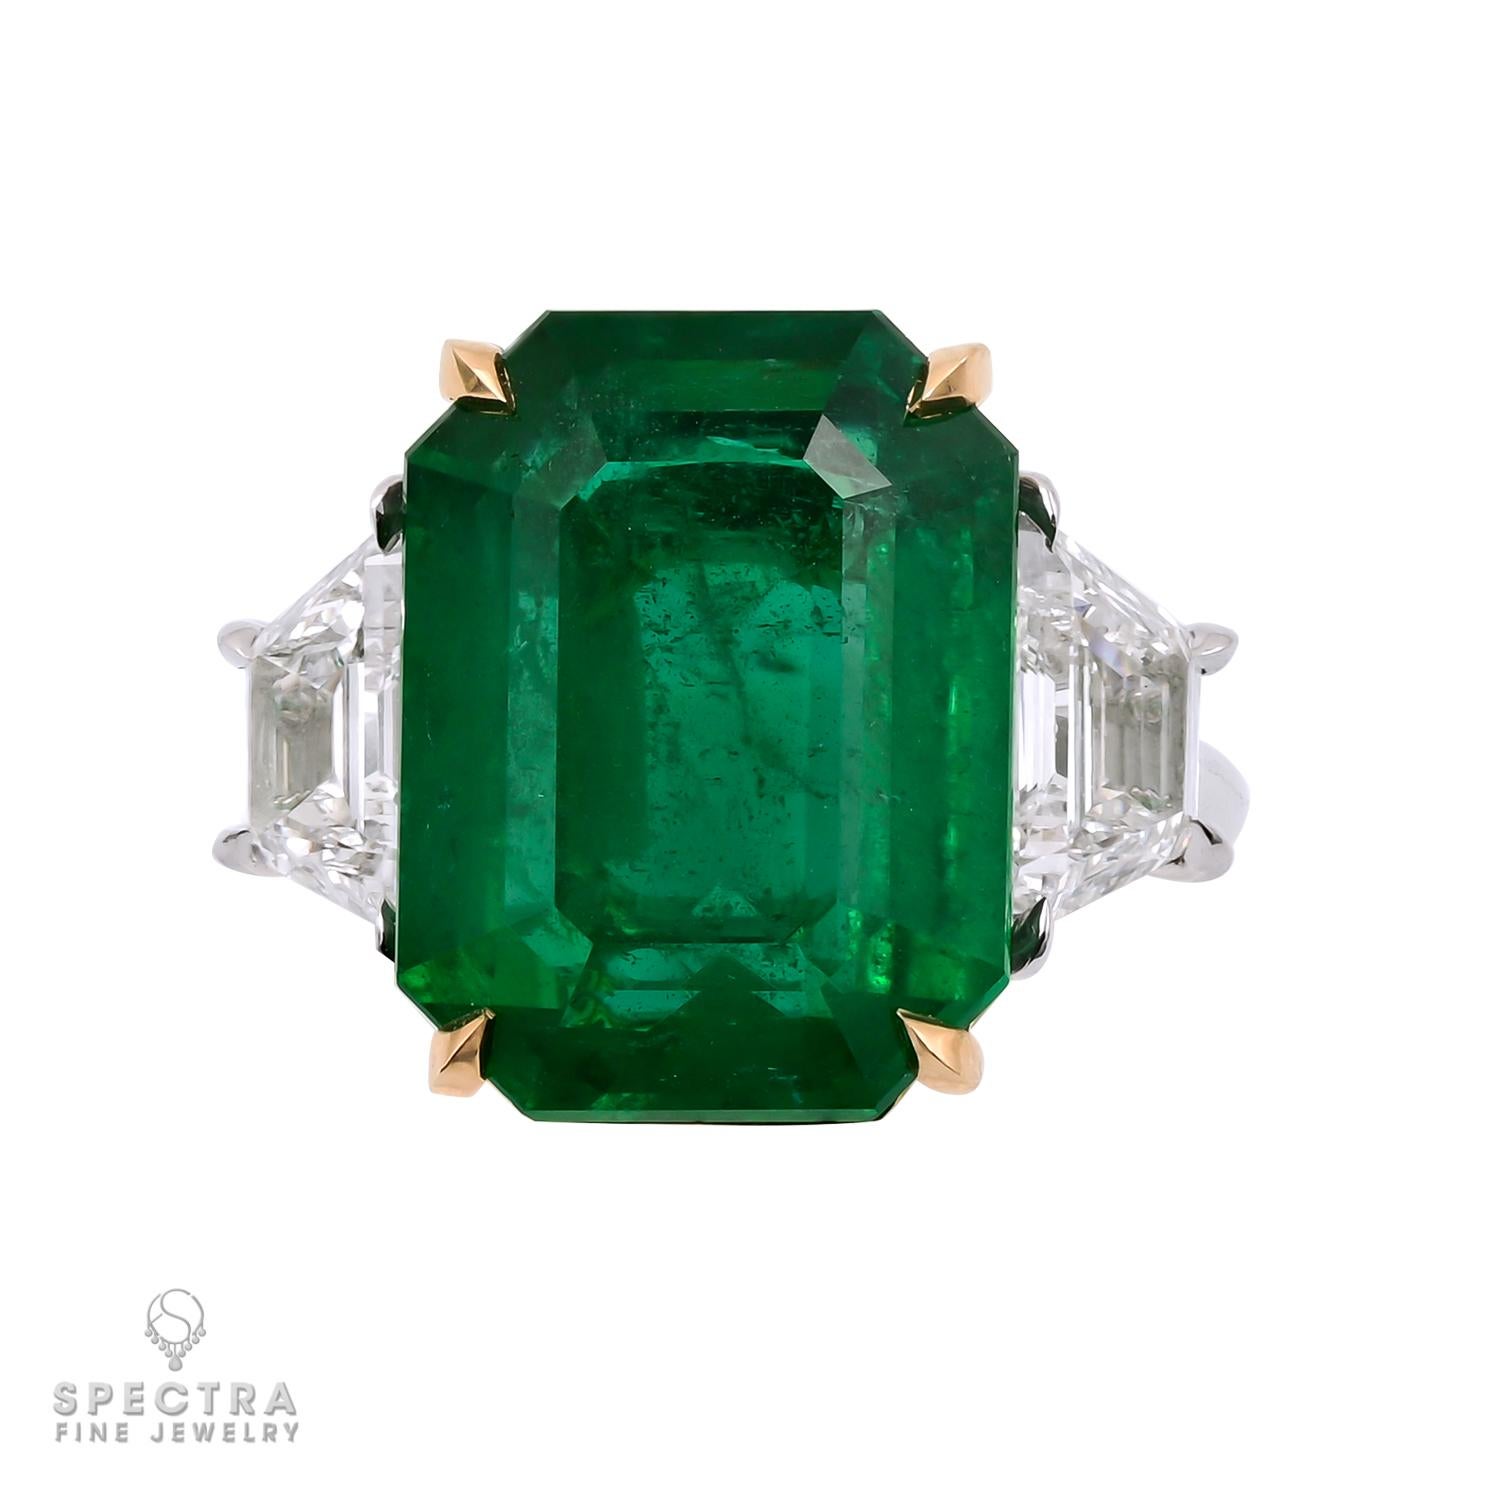 Octagon Cut Spectra Fine Jewelry 11.68 Carat Zambian Emerald Diamond Ring For Sale